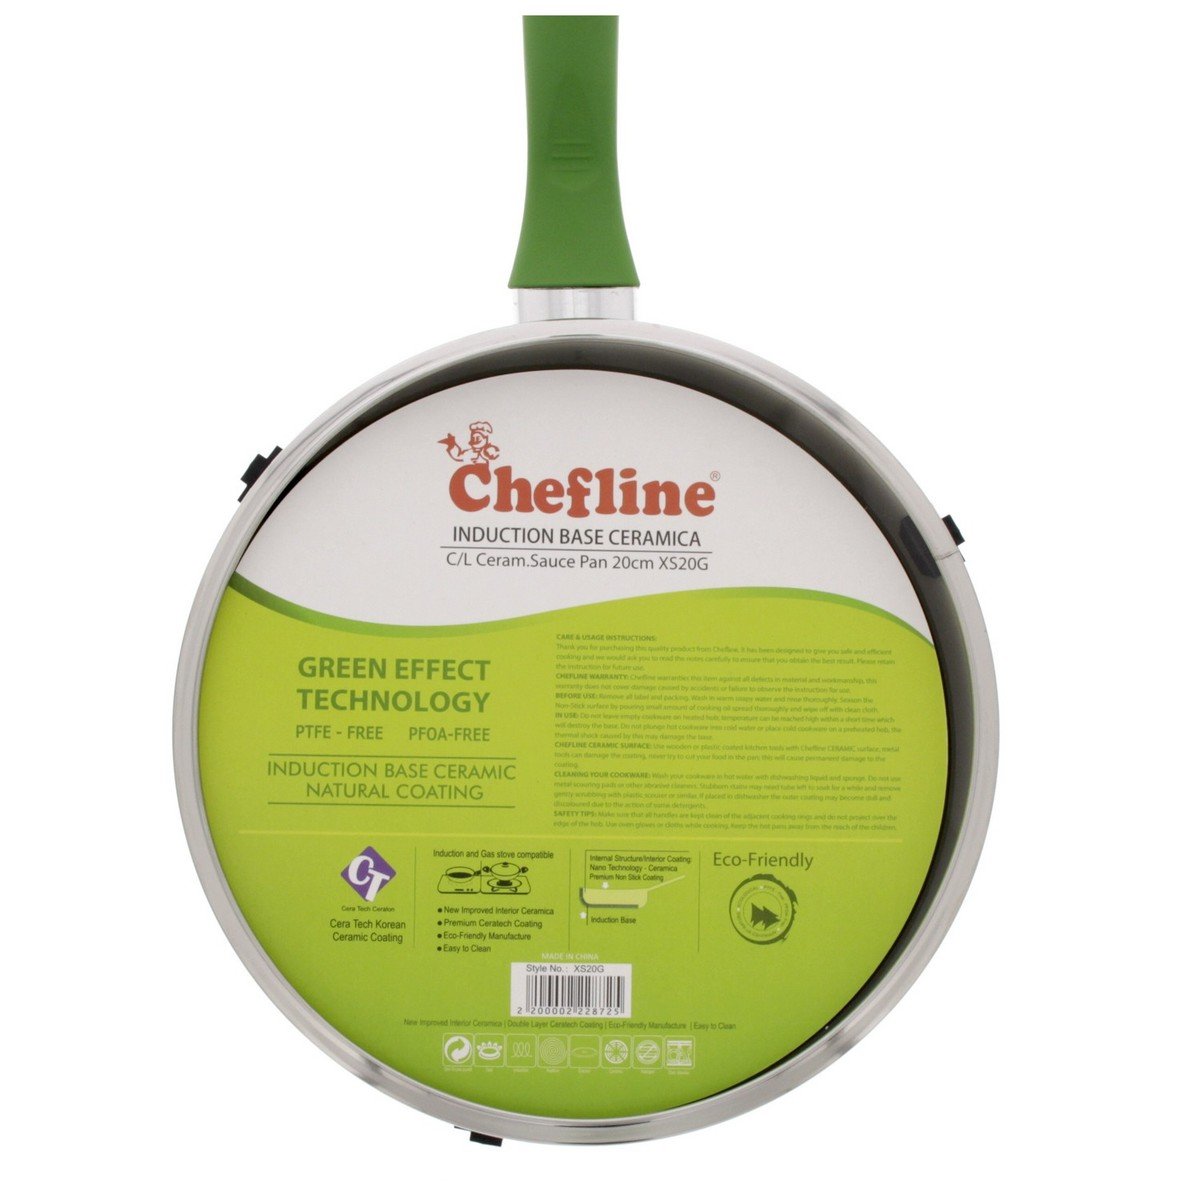 Chefline Ceramic Sause Pan XS20G 20cm